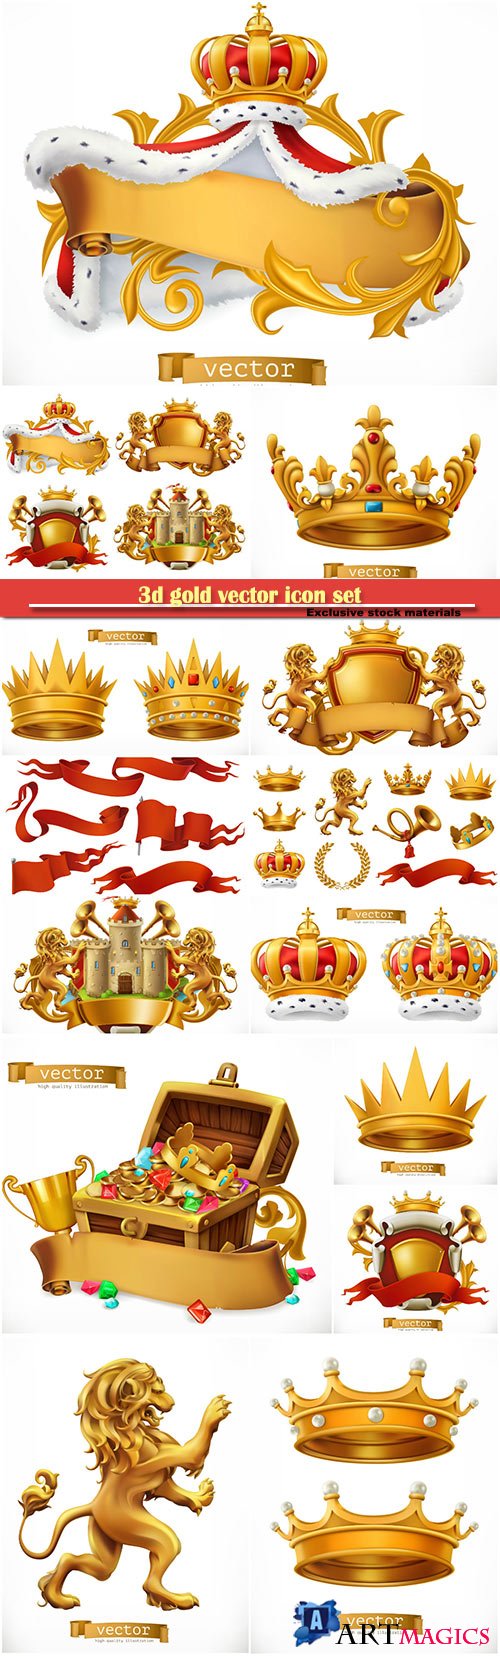 3d gold vector icon set, crown of the king, laurel wreath, trumpet, lion, ribbon